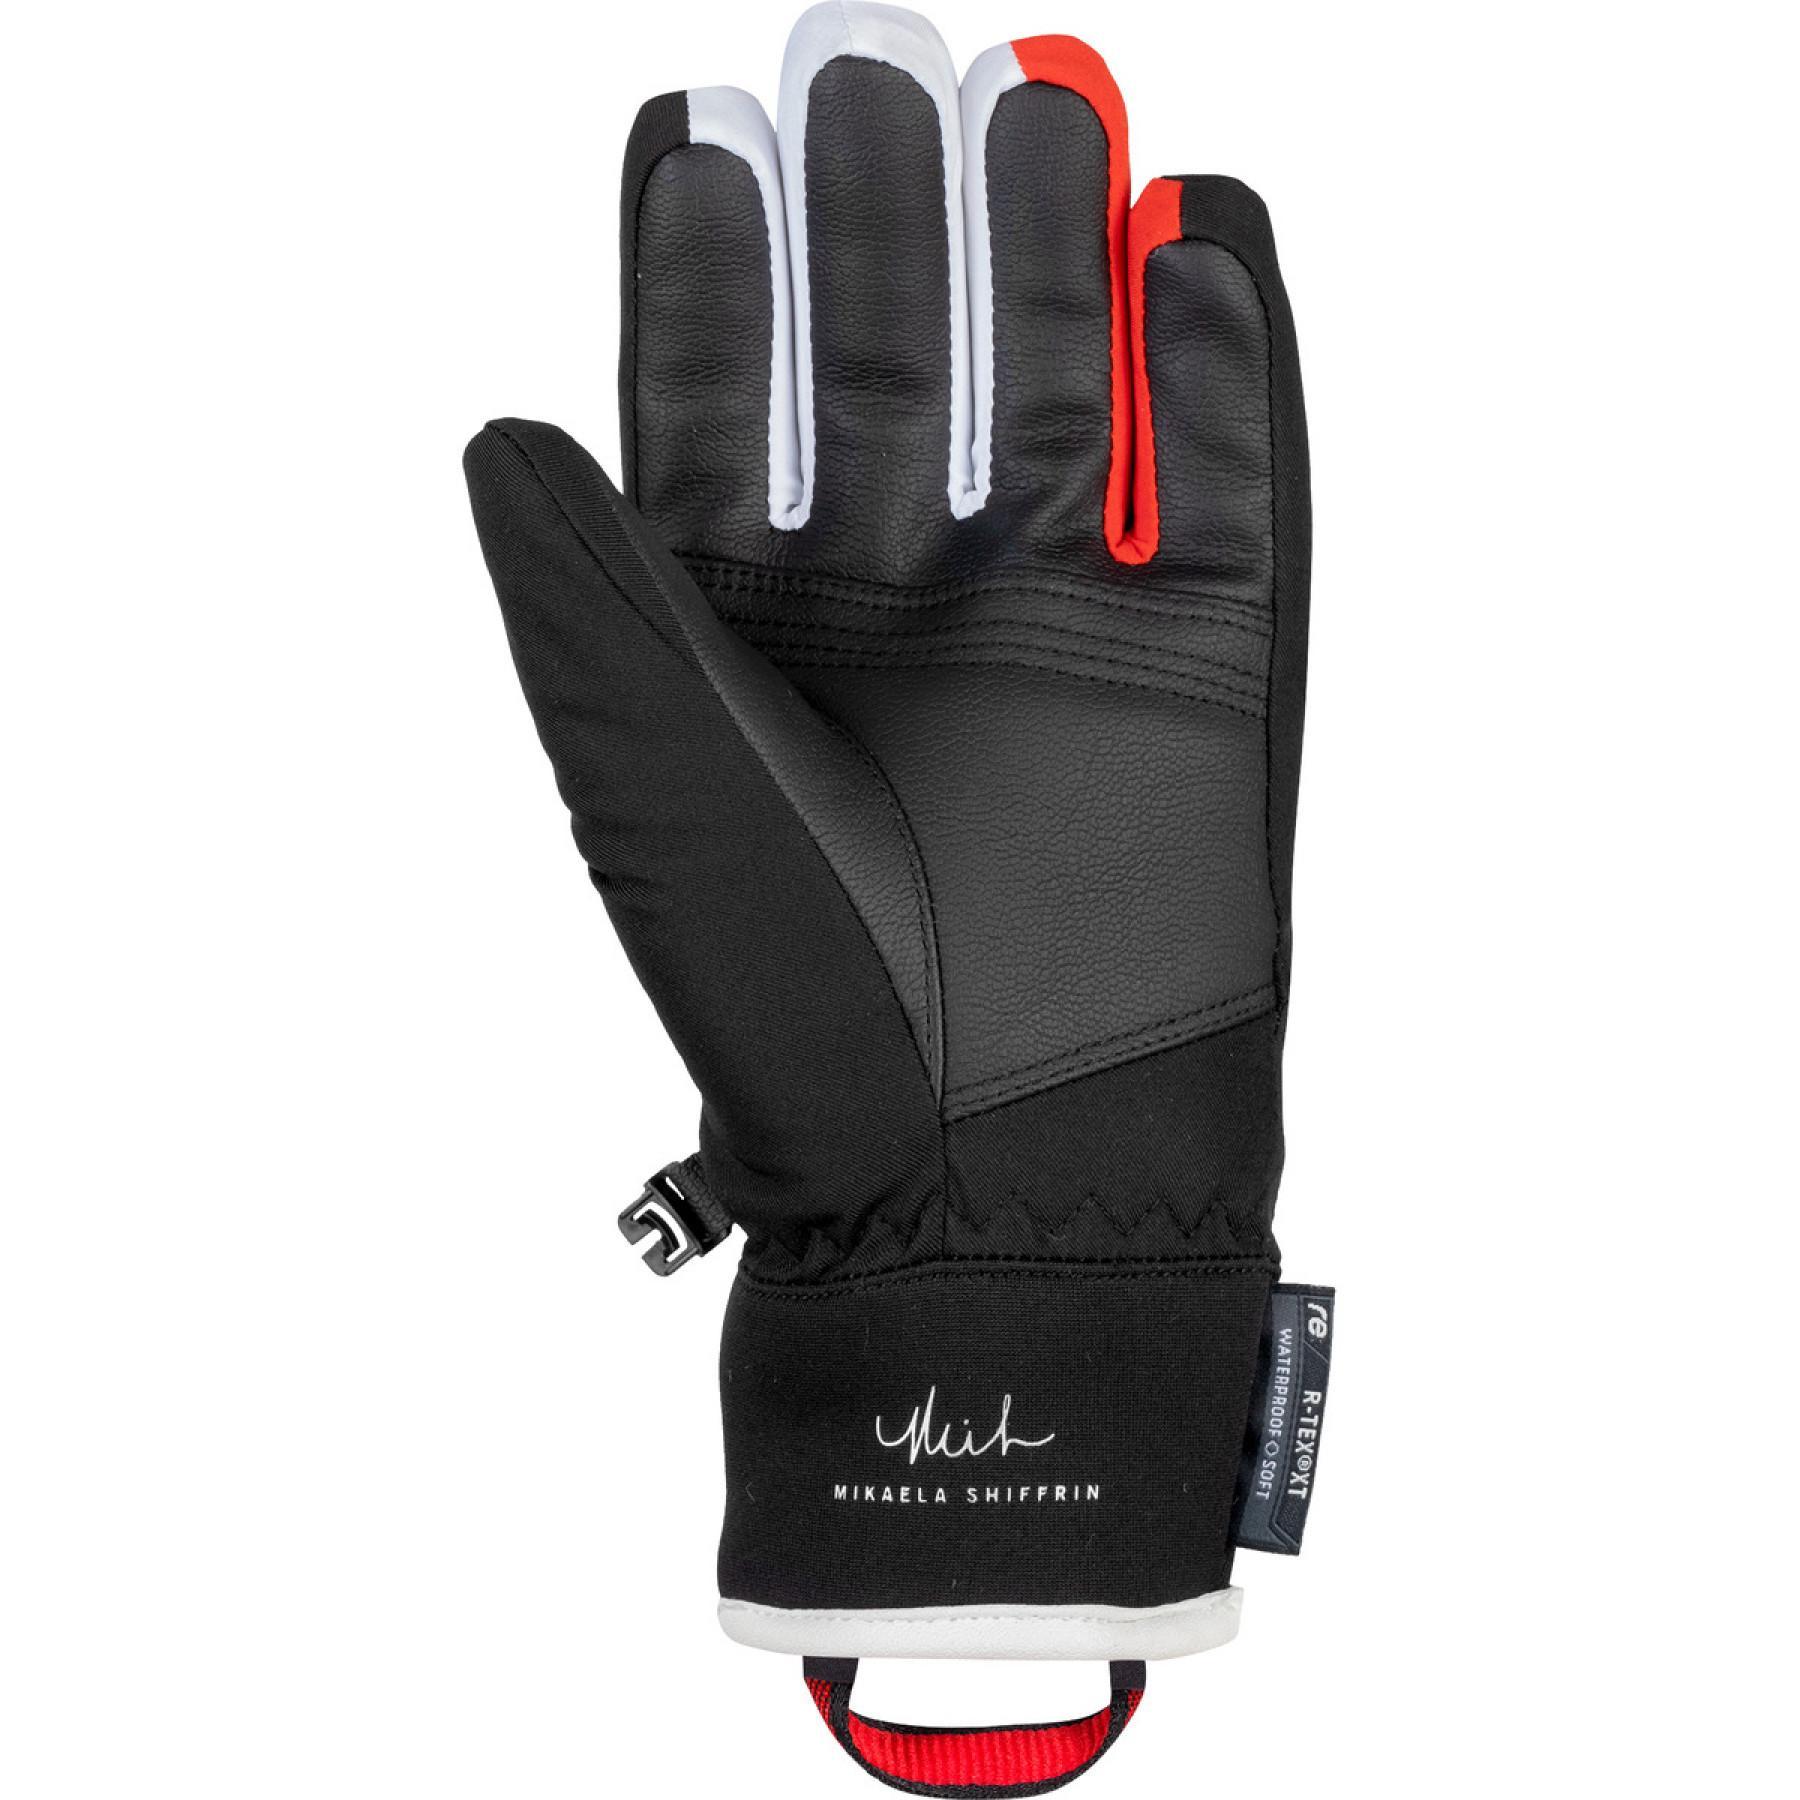 Children's gloves Reusch Mikaela Shiffrin R-tex® Xt